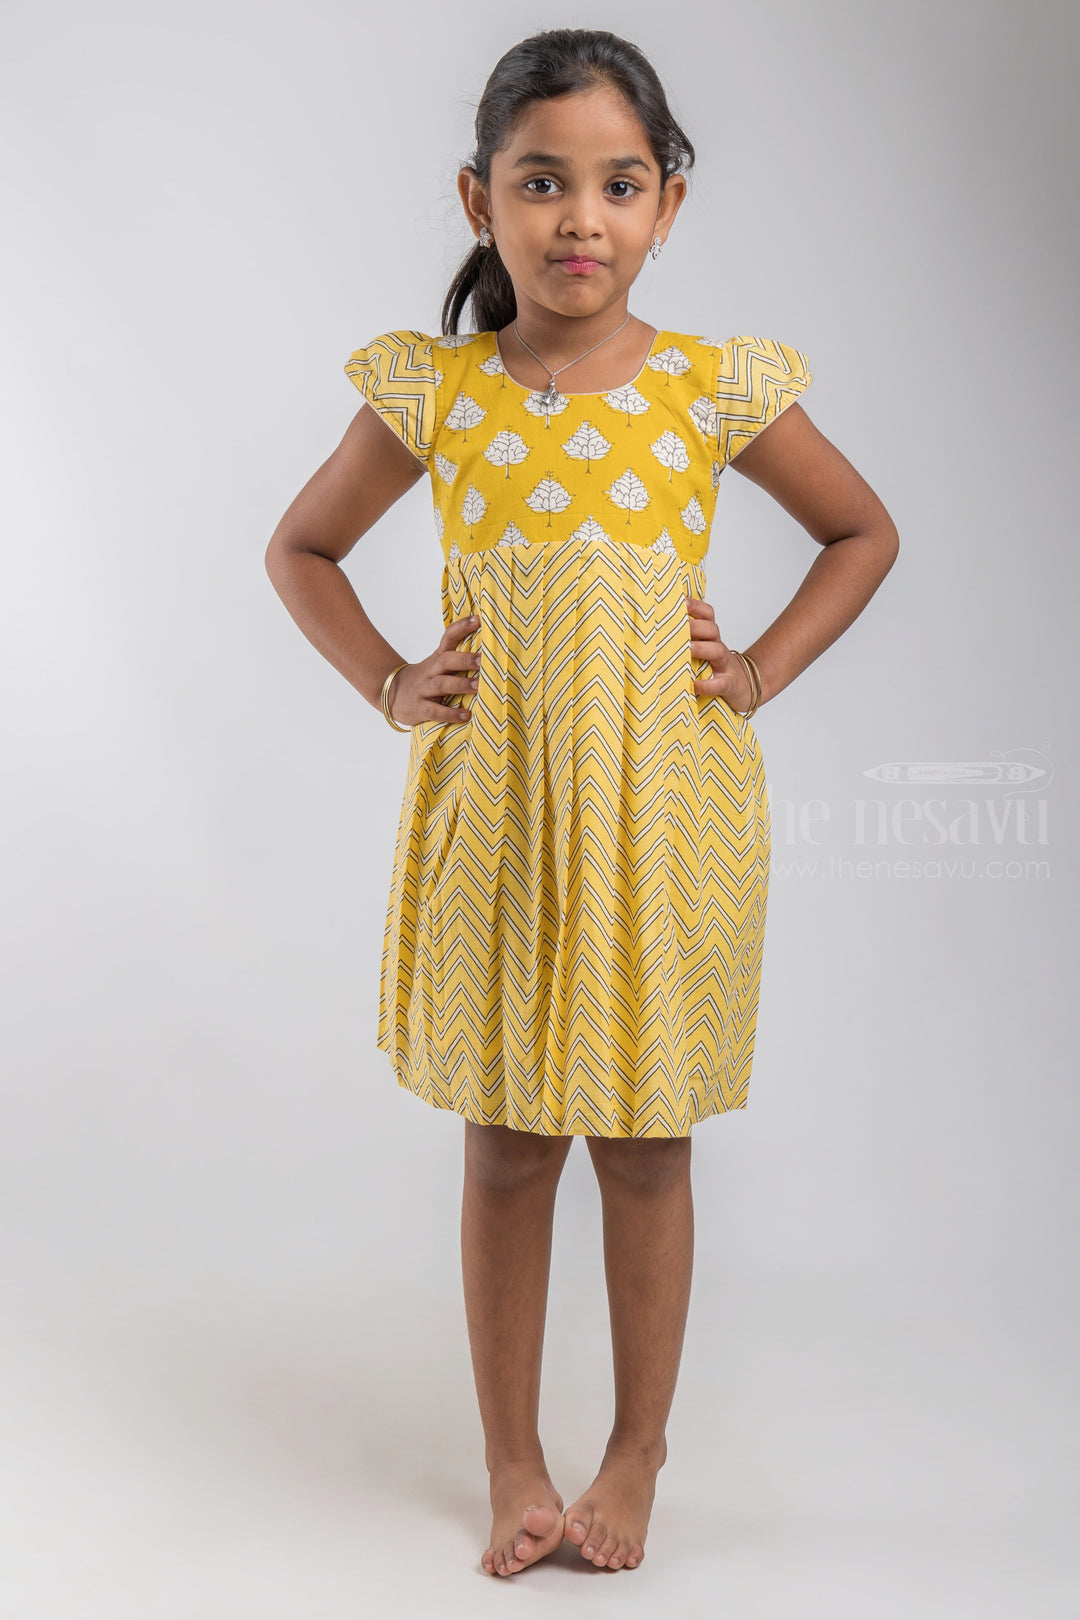 The Nesavu Girls Cotton Frock Greenish Yellow Printed Cotton Gown For Baby Girls psr silks Nesavu 12 (3M) / Yellow / Cotton GFC756